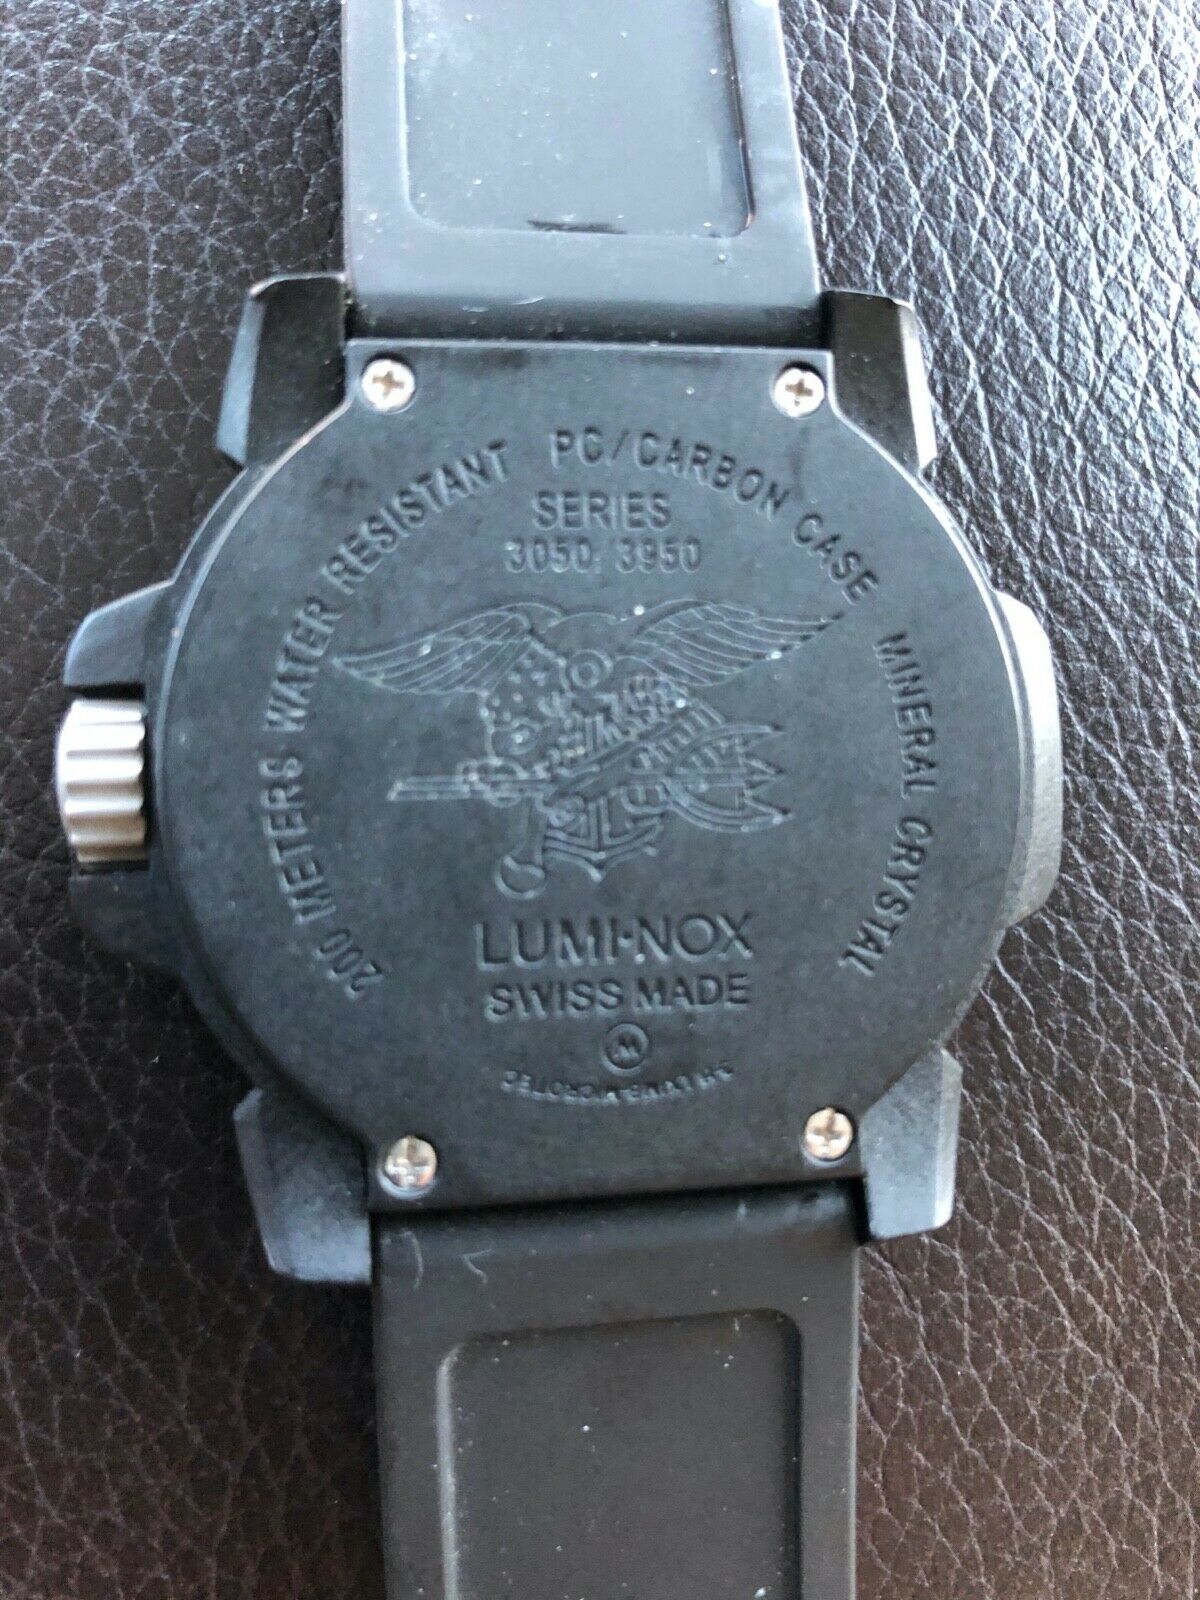 Luminox Series 3050 / 3950 SAR, 200 meter carbon watch - orange